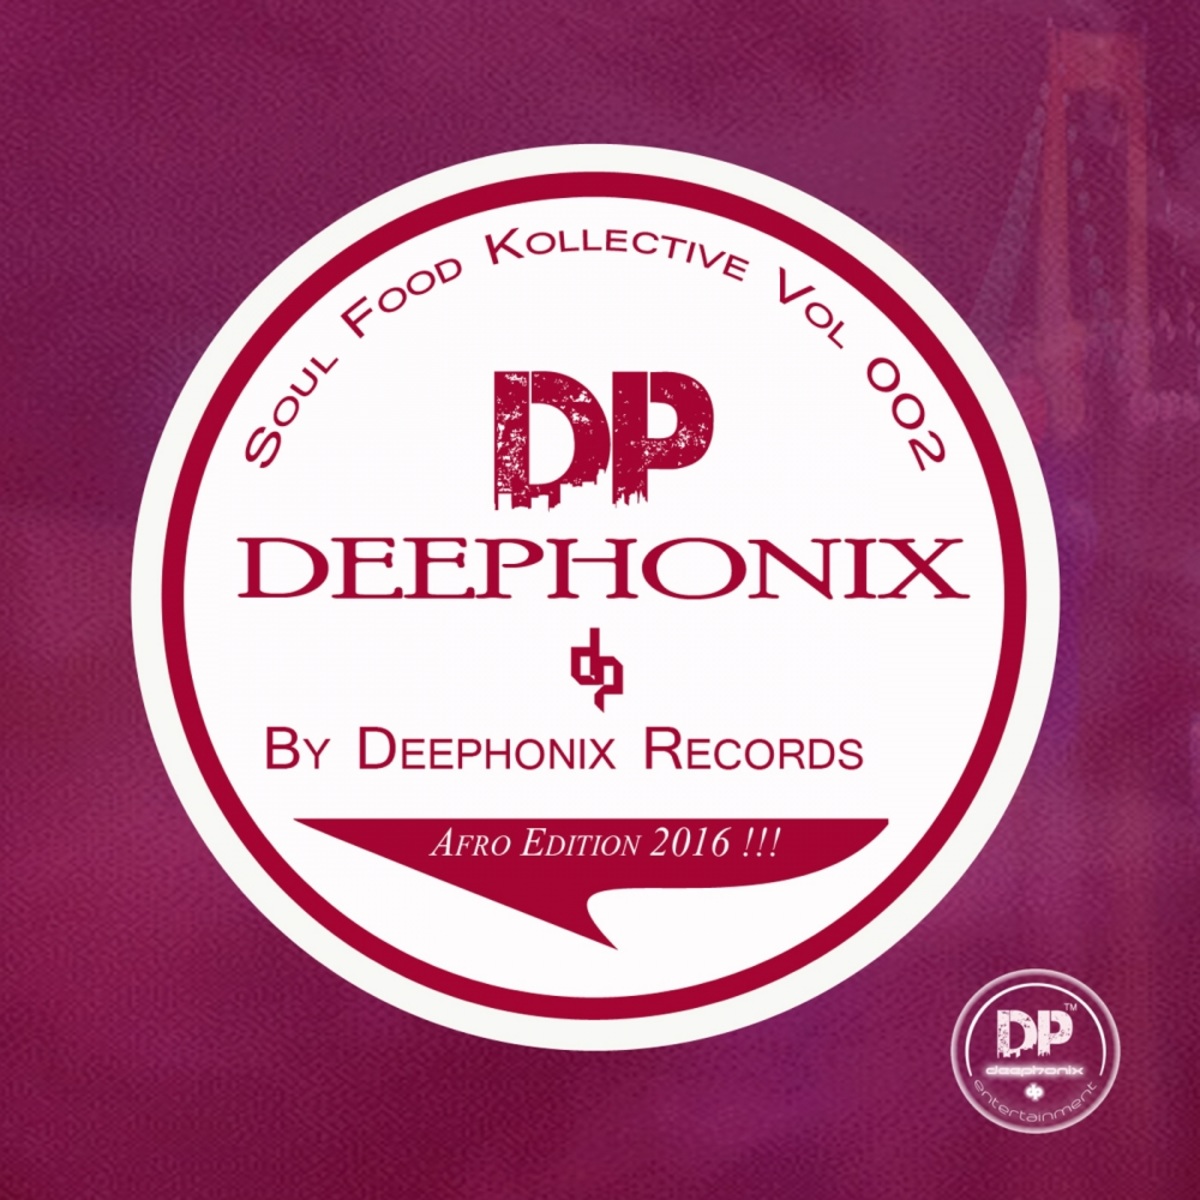 Deephonix Records - Soul Food Kollective Vol2 [Afro Edition] / Deephonix